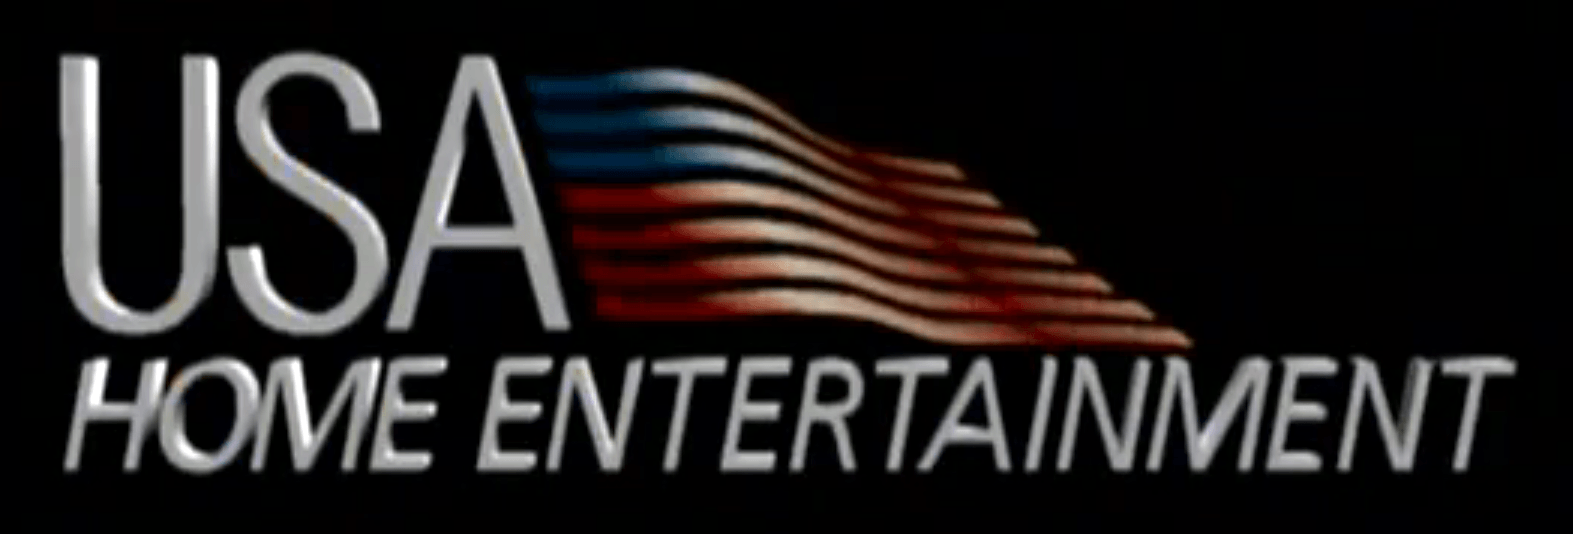 Maroon Entertainment Logo - USA Home Entertainment | Logopedia | FANDOM powered by Wikia